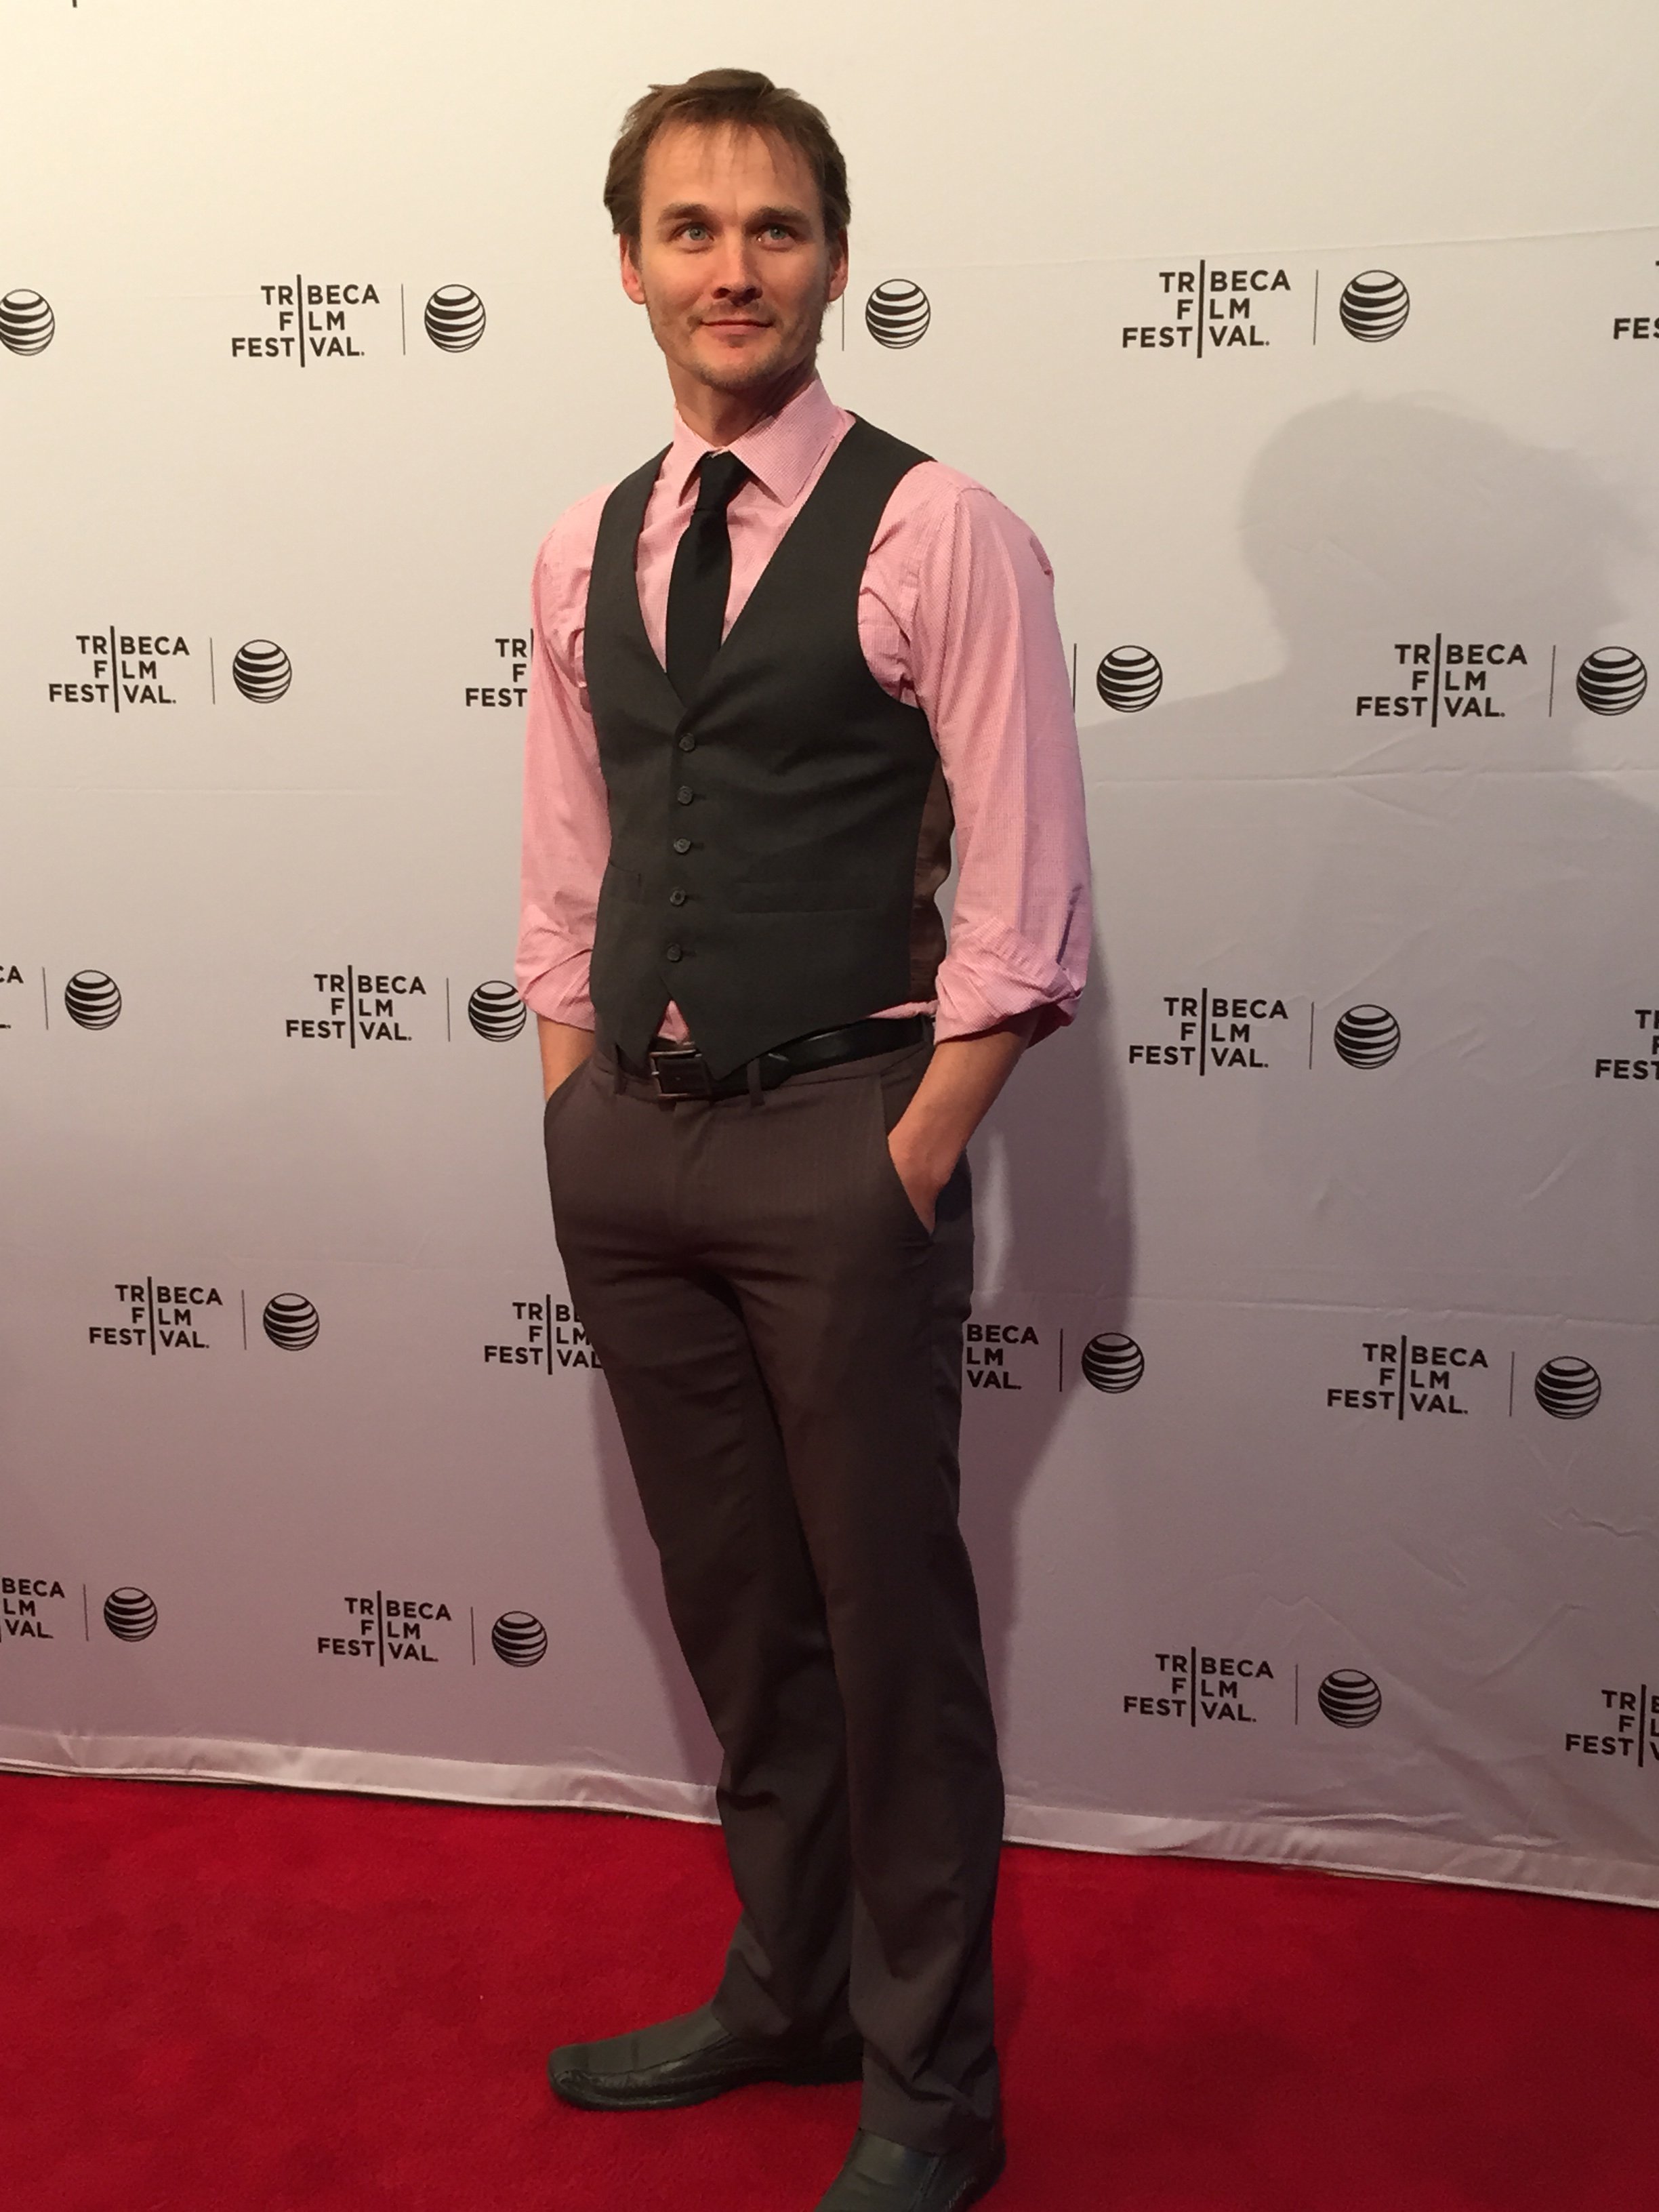 Travis Hammer at the Tribeca film Festival premiere of Bare.